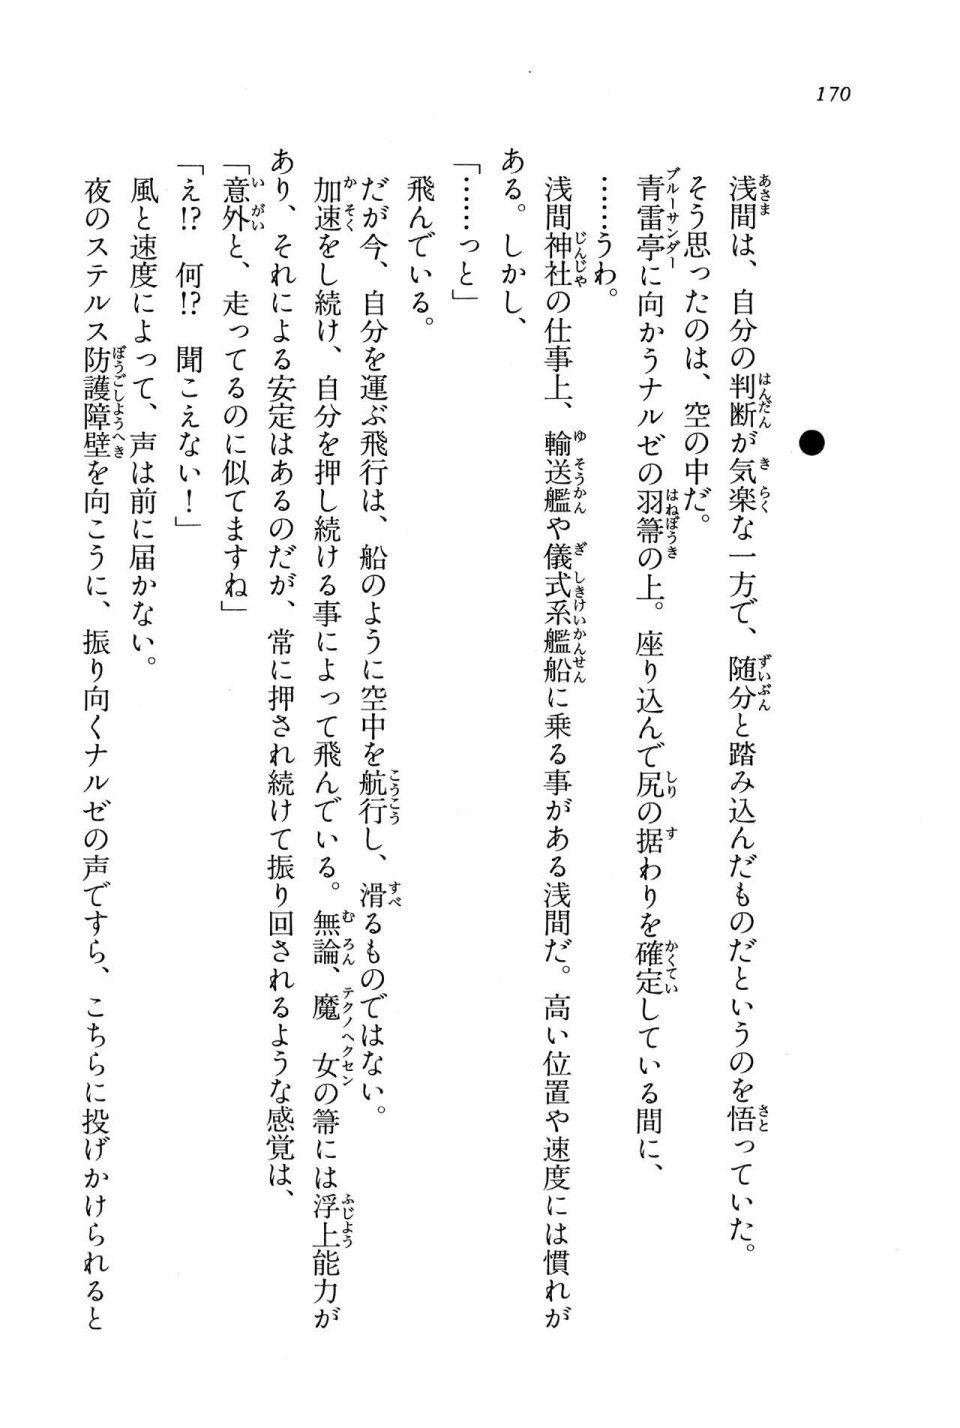 Kyoukai Senjou no Horizon BD Special Mininovel Vol 7(4A) - Photo #174